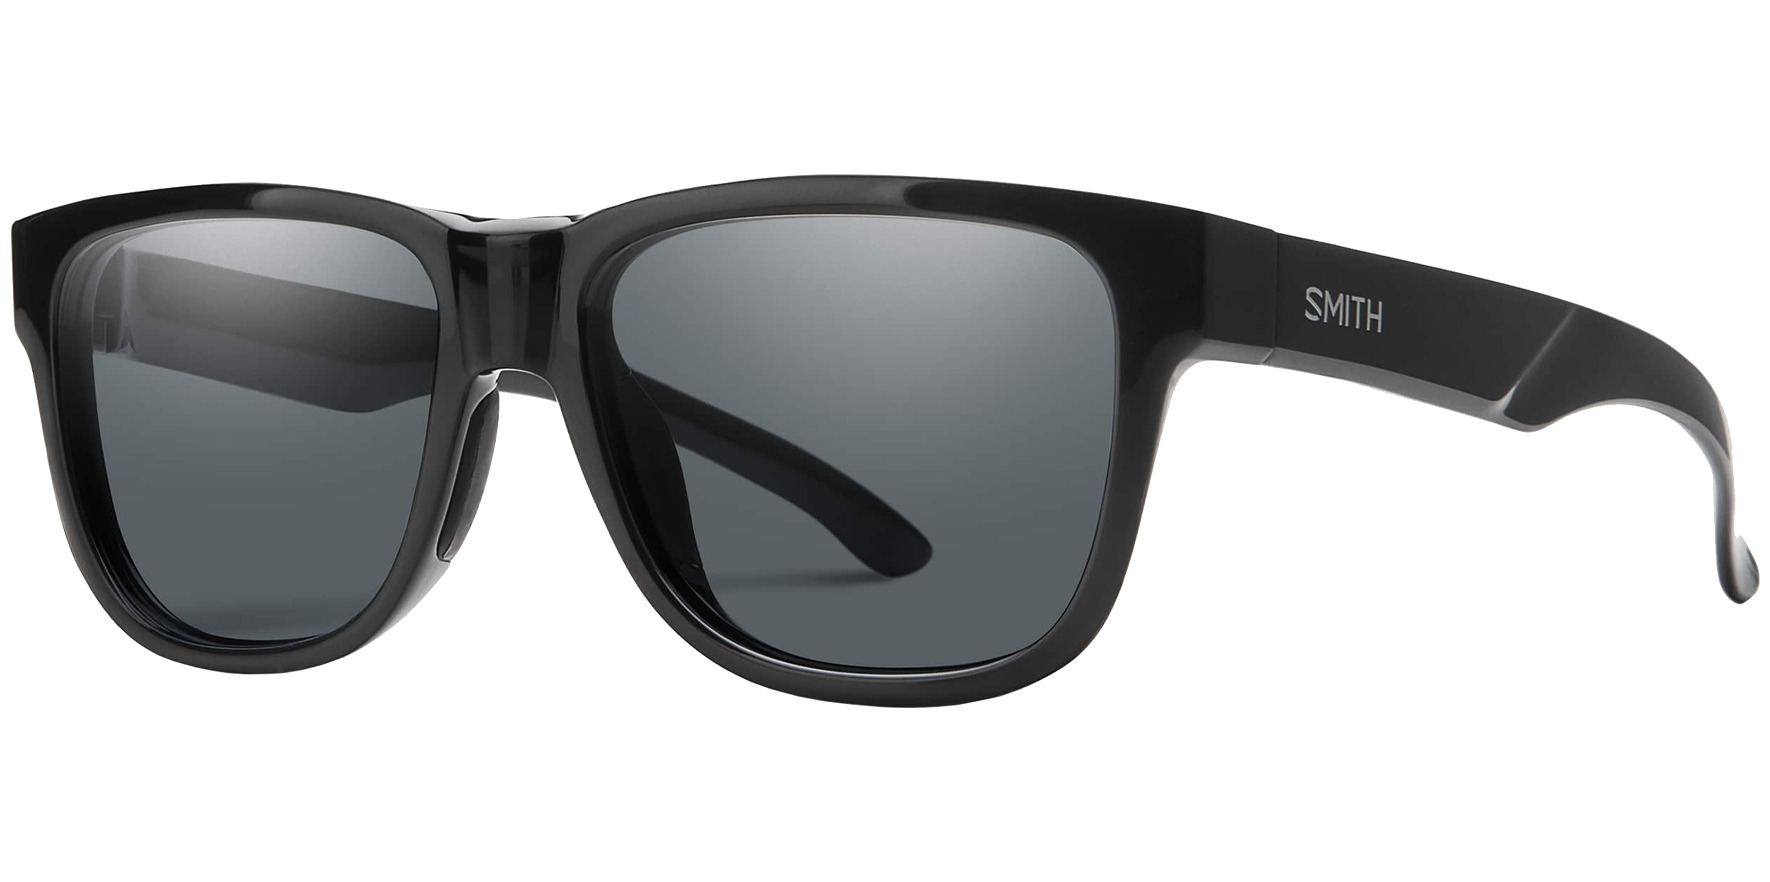 Smith Optics Polarized & Non Polarized Sunglasses (various styles/colors) from $49 + Free Shipping